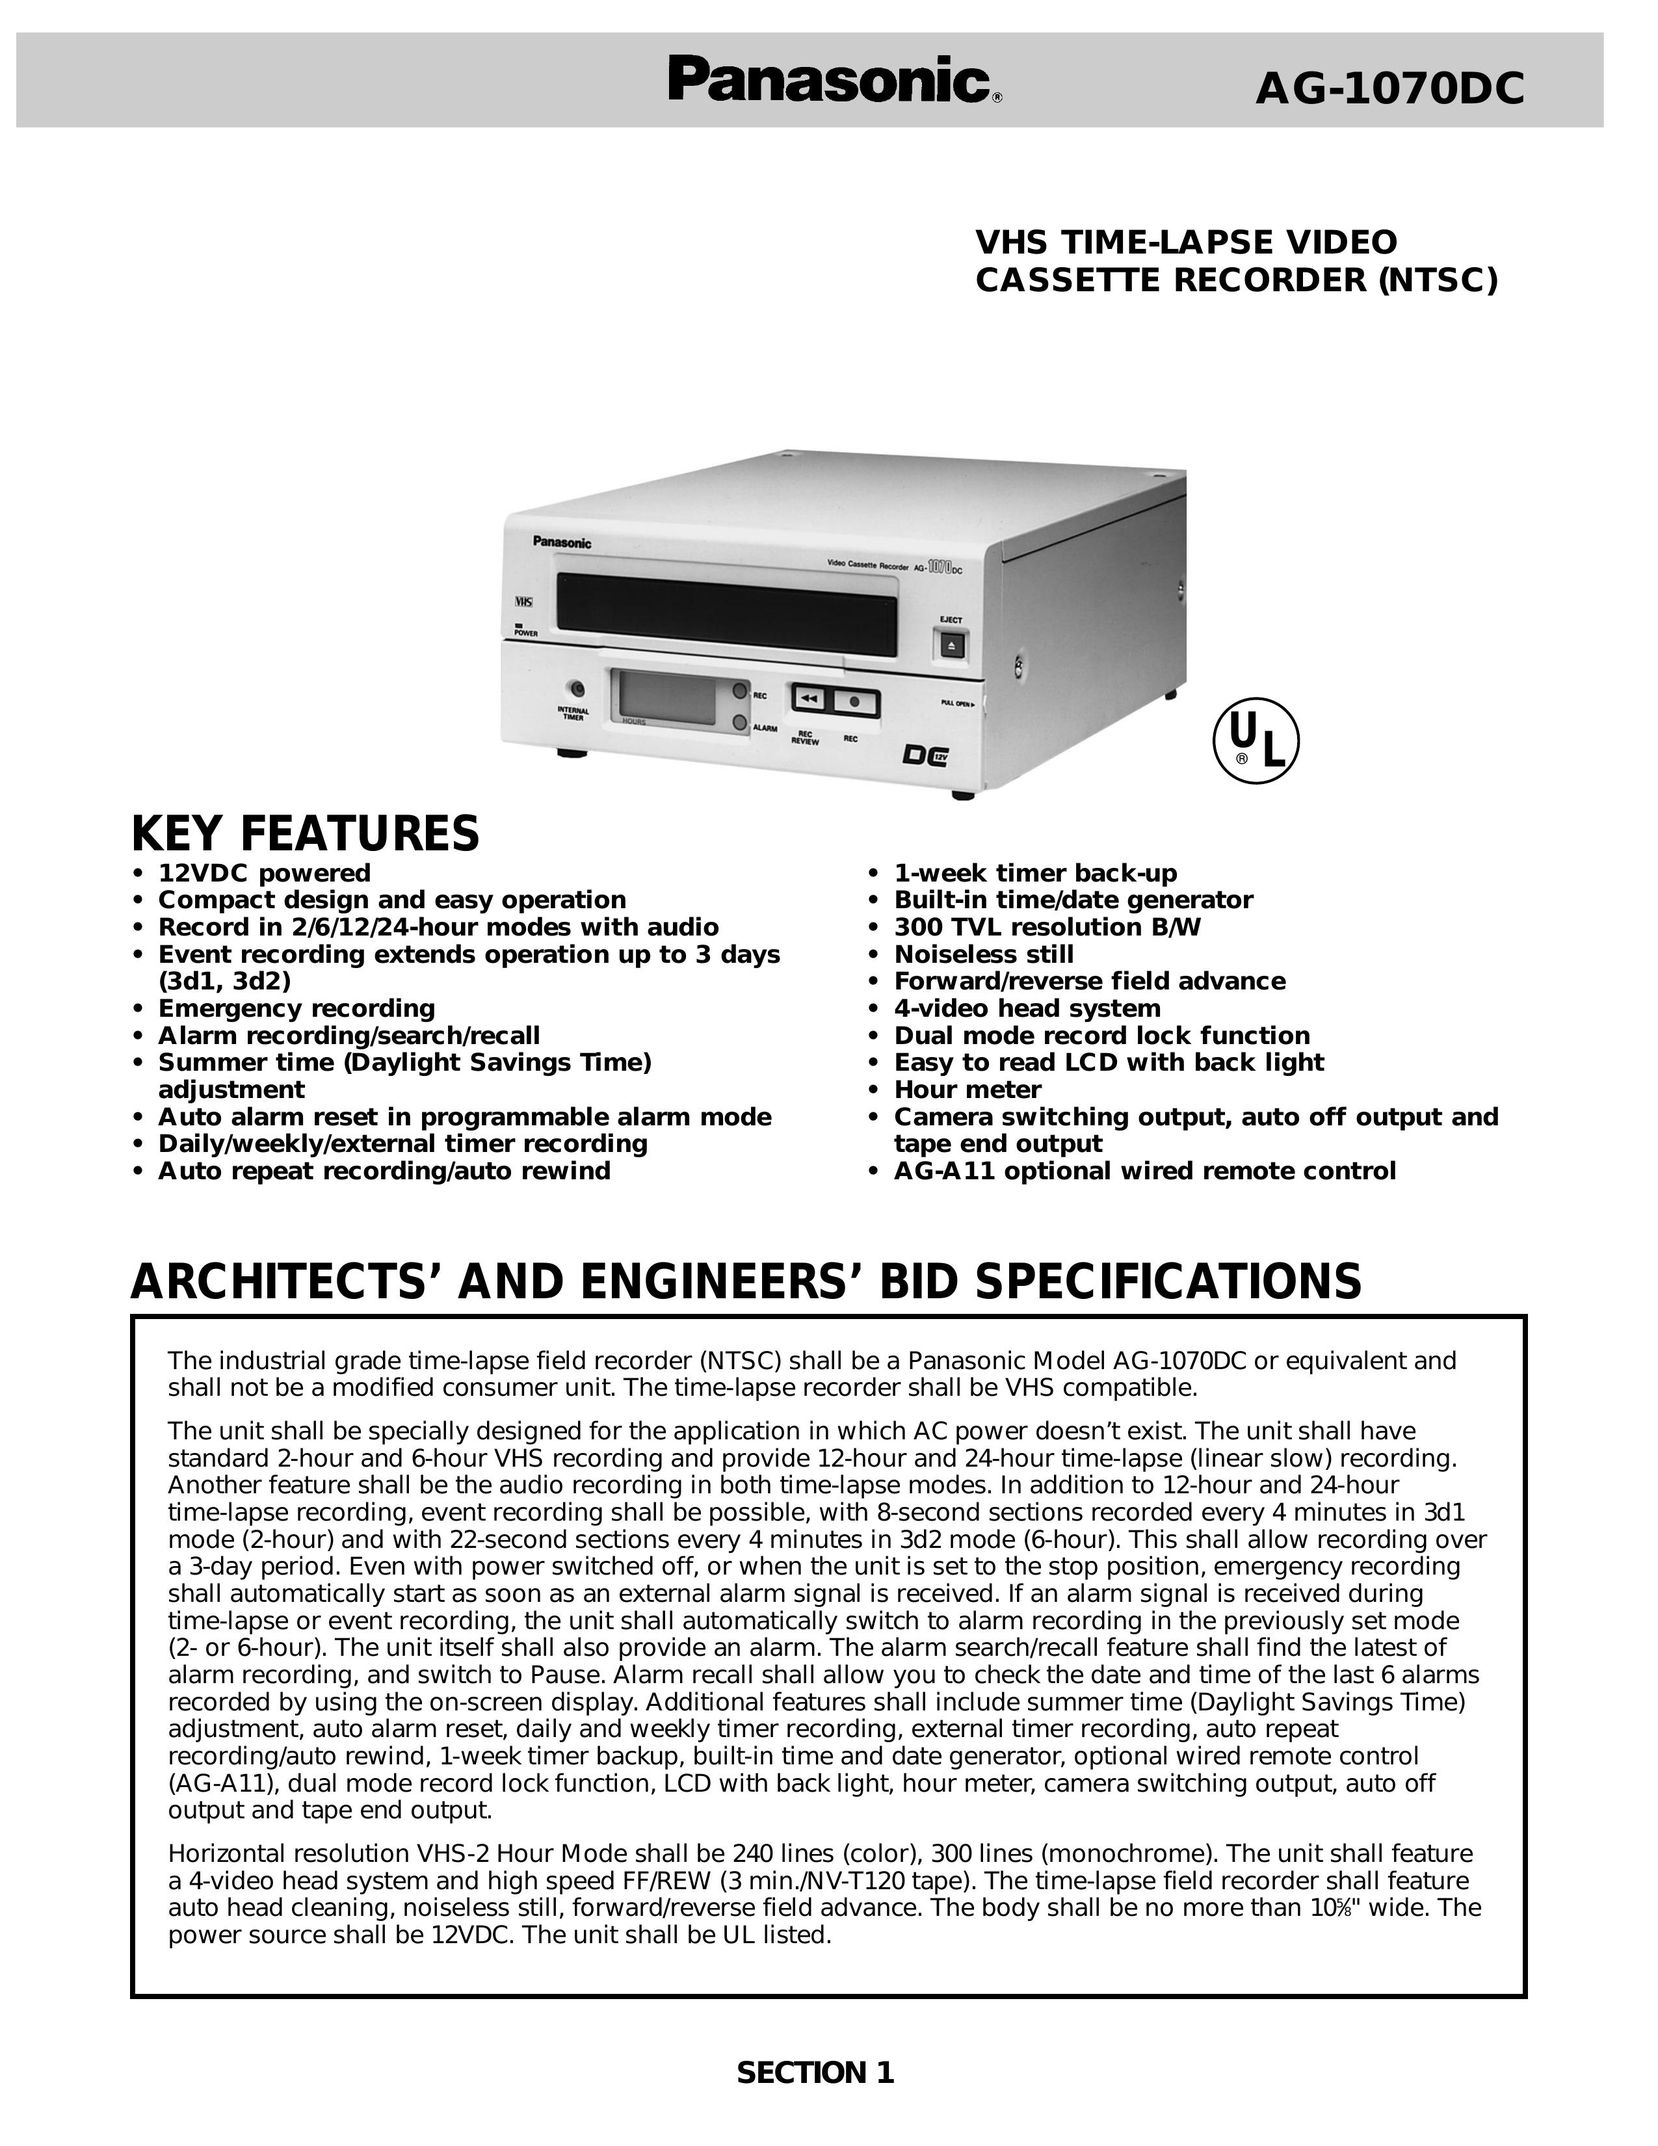 Panasonic AG-1070DC VCR User Manual